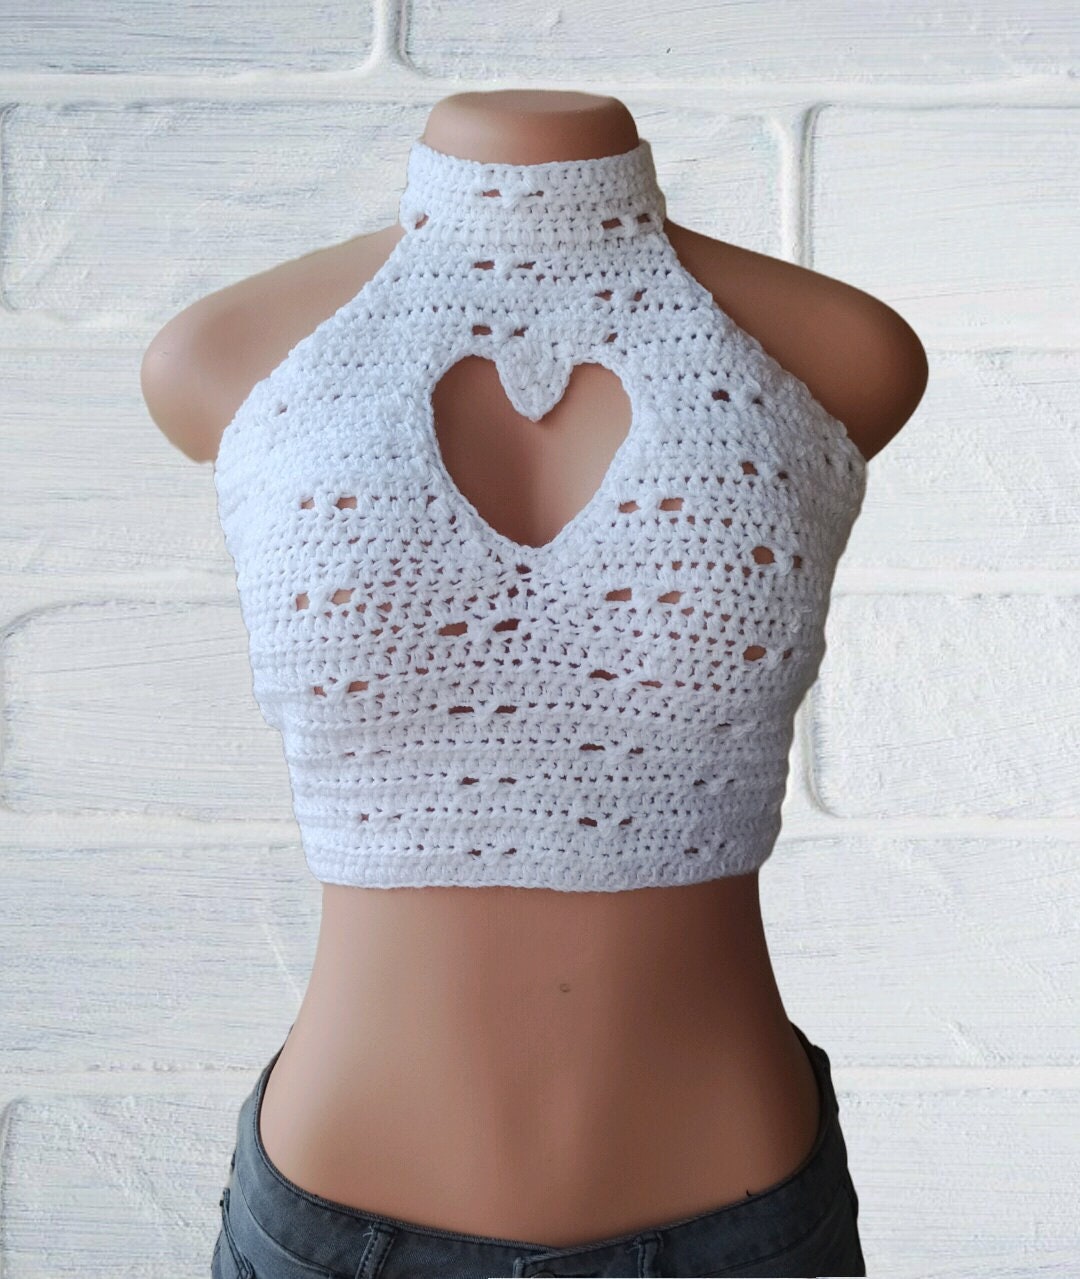 Sweatshirts & Sweaters Love Moschino - Heart cut-out turtleneck sweater -  W4F8100E1512C74